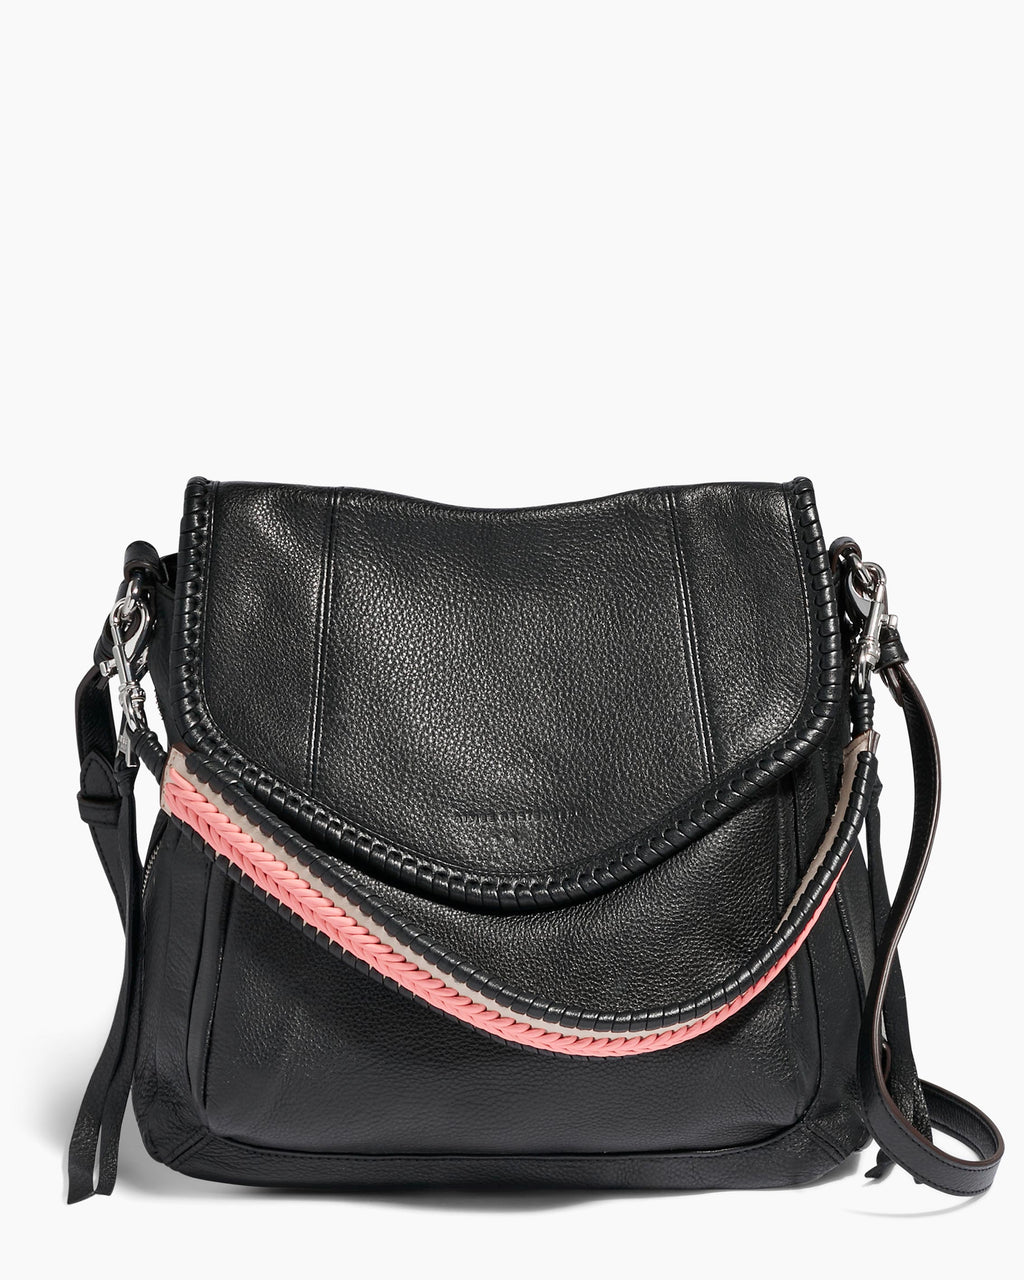 Aimee Kestenberg No BS Leather Backpack in Chestnut